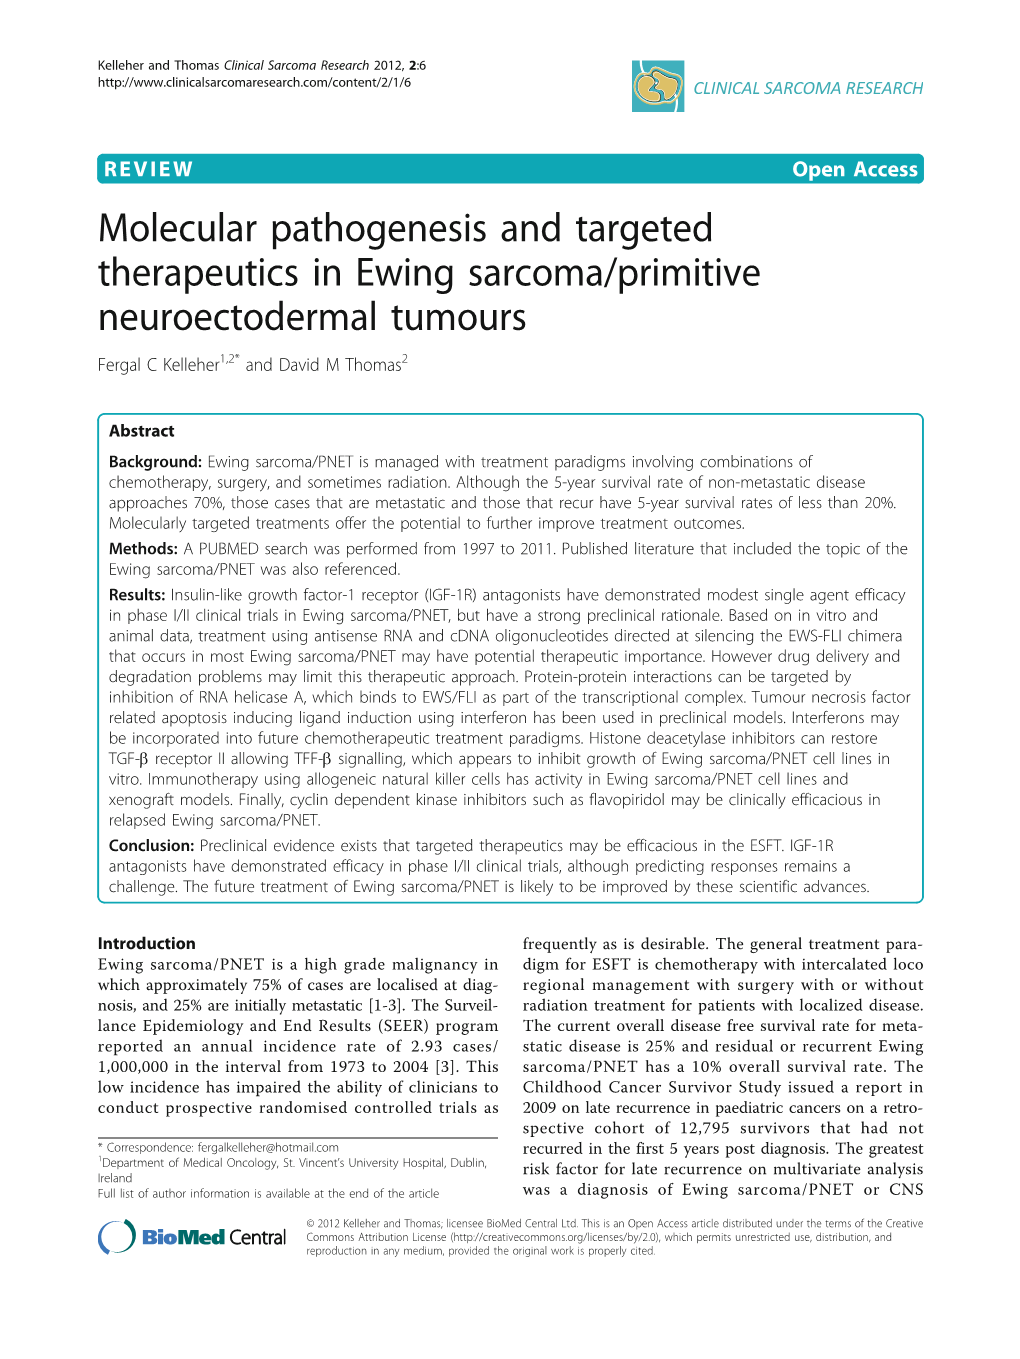 Molecular Pathogenesis and Targeted Therapeutics in Ewing Sarcoma/Primitive Neuroectodermal Tumours Fergal C Kelleher1,2* and David M Thomas2